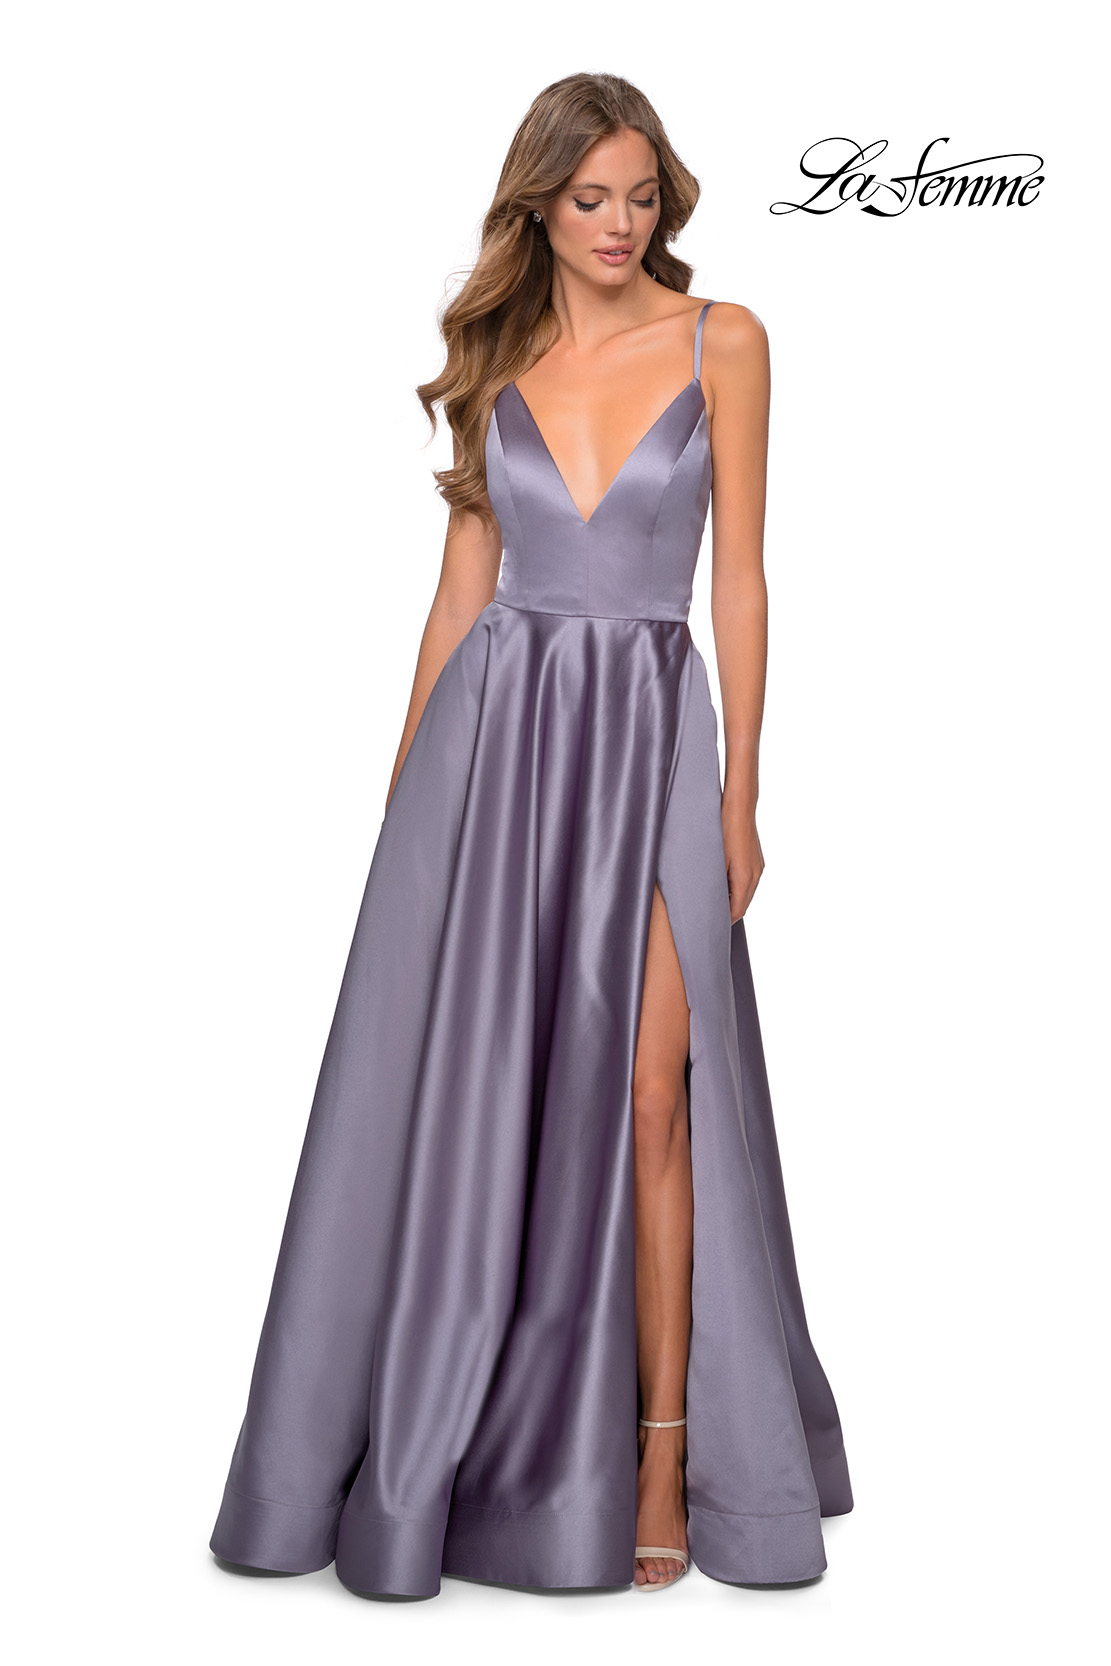 purple and gray dress